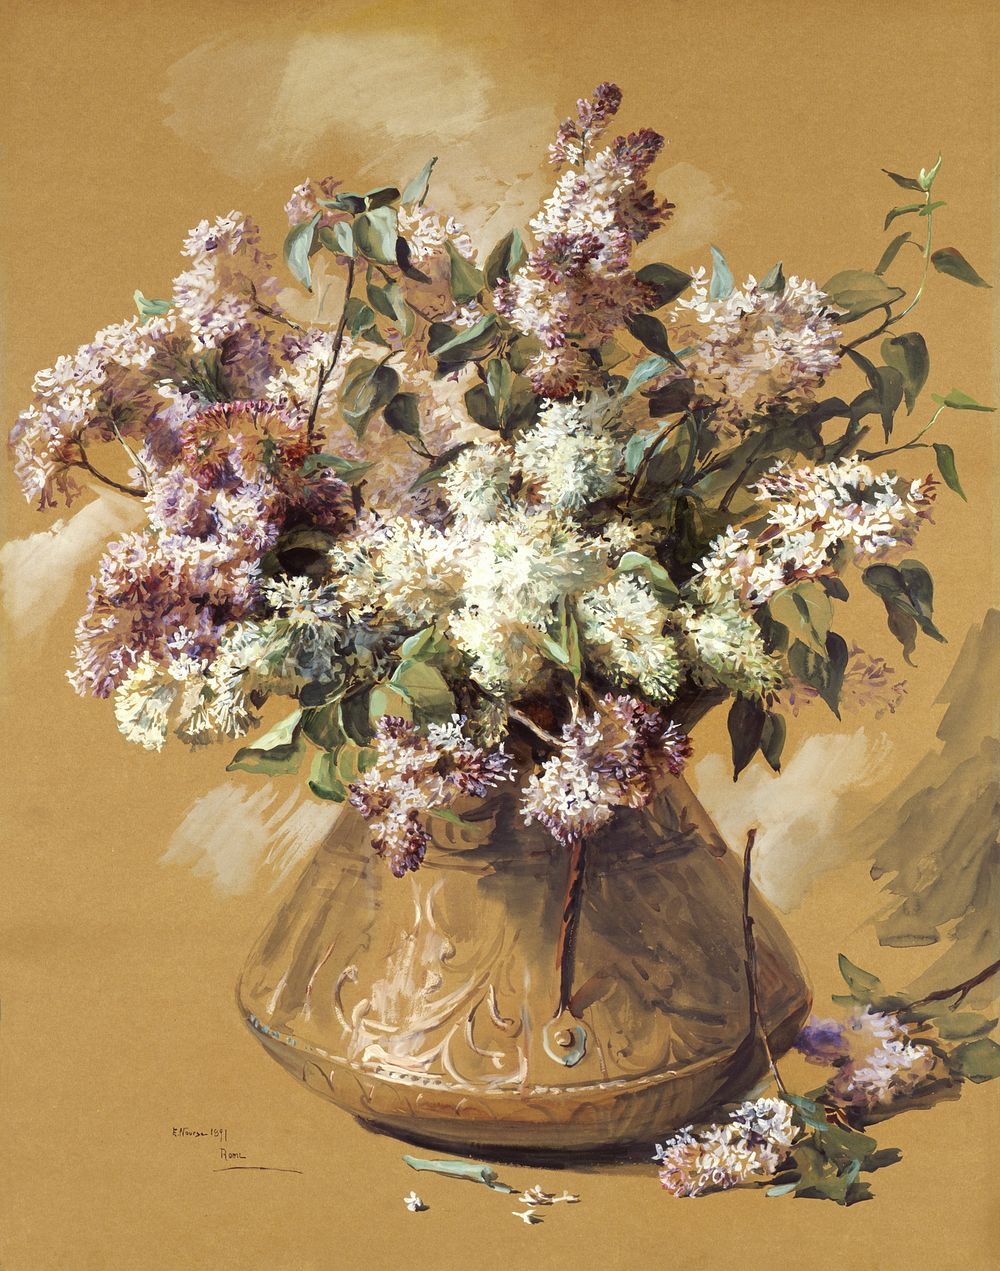 Lilacs (1891), vintage flower vase illustration by Elizabeth Nourse. Original public domain image from The Smithsonian…